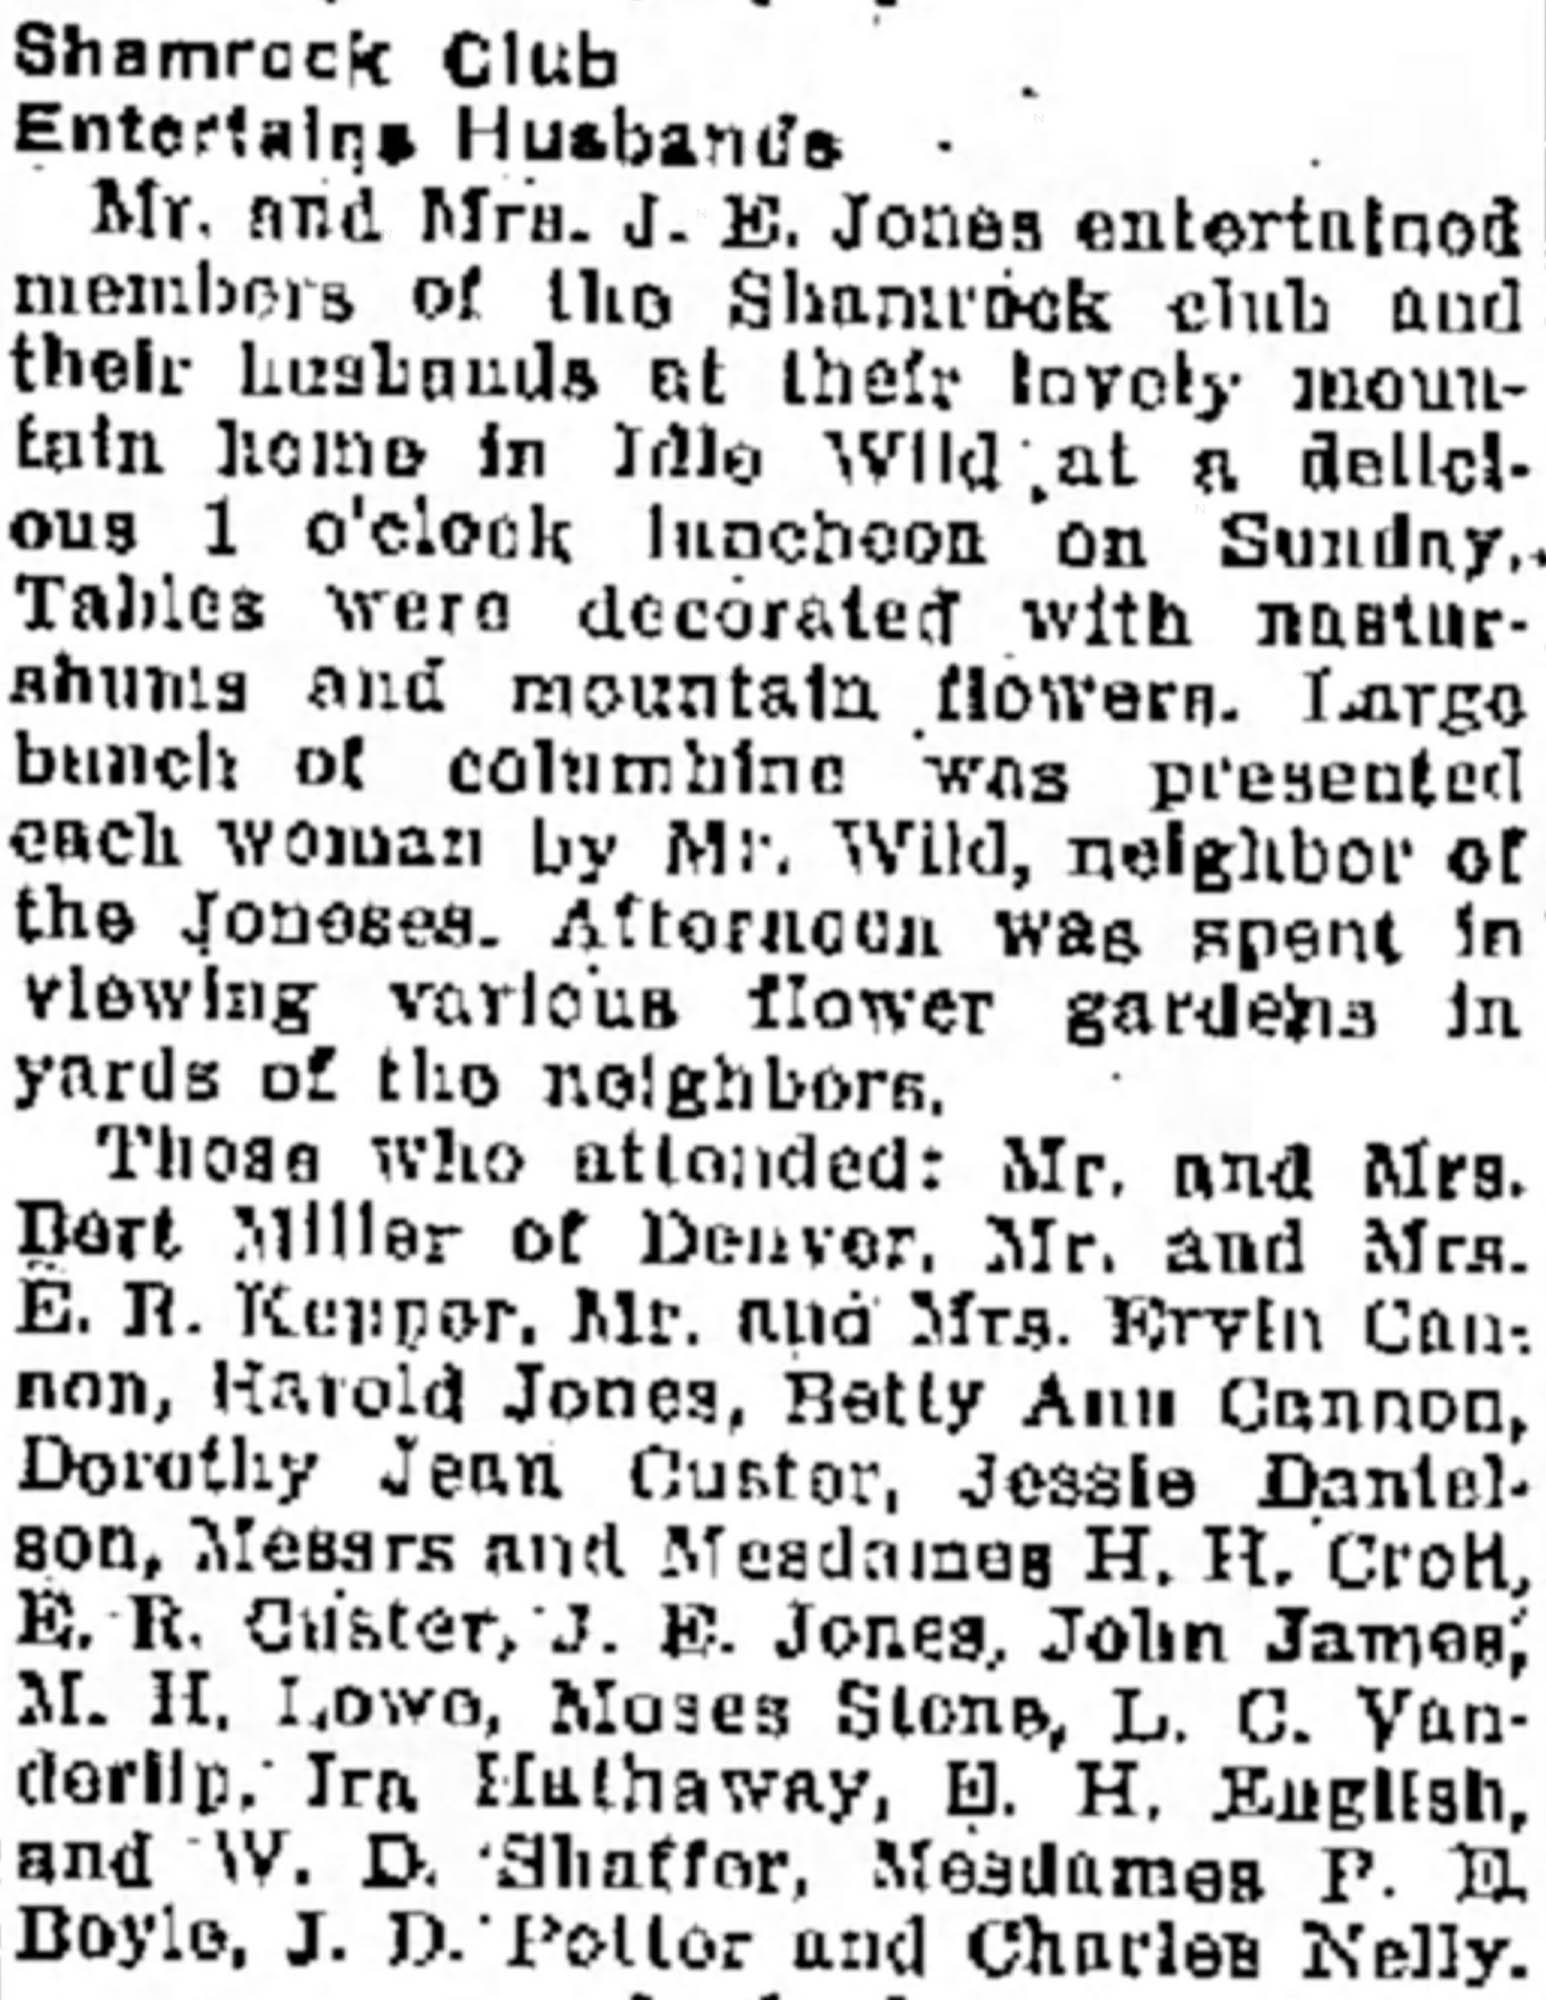 Idlewild Lodge - idlewildlodge.github.io - 1933-06-19 - Greeley Daily Tribune - Shamrock Club At John Jones Home